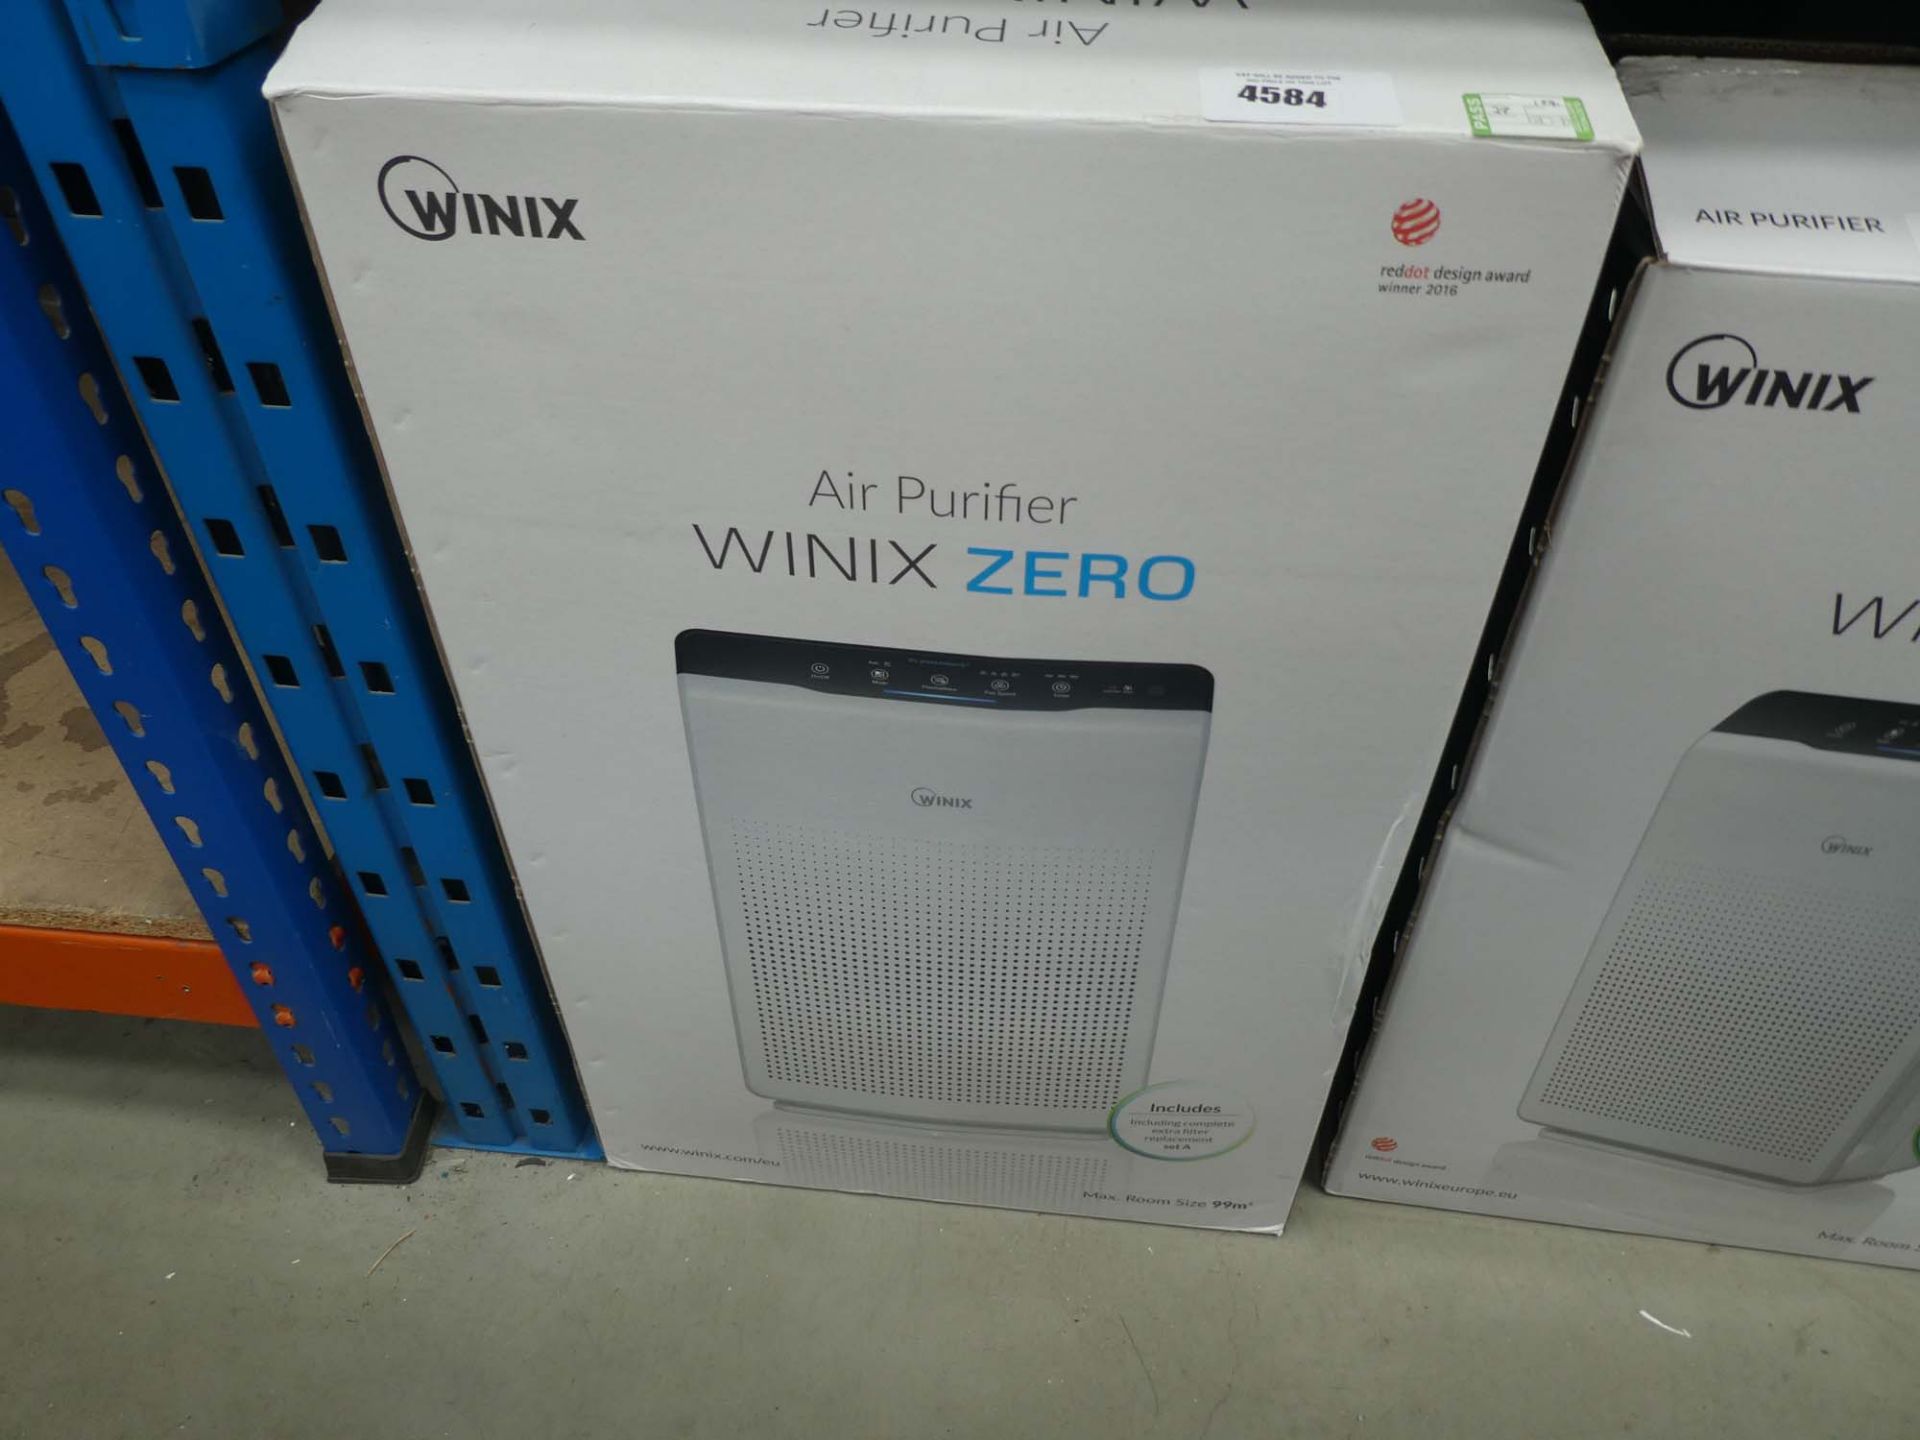 Boxed Winix air purifier